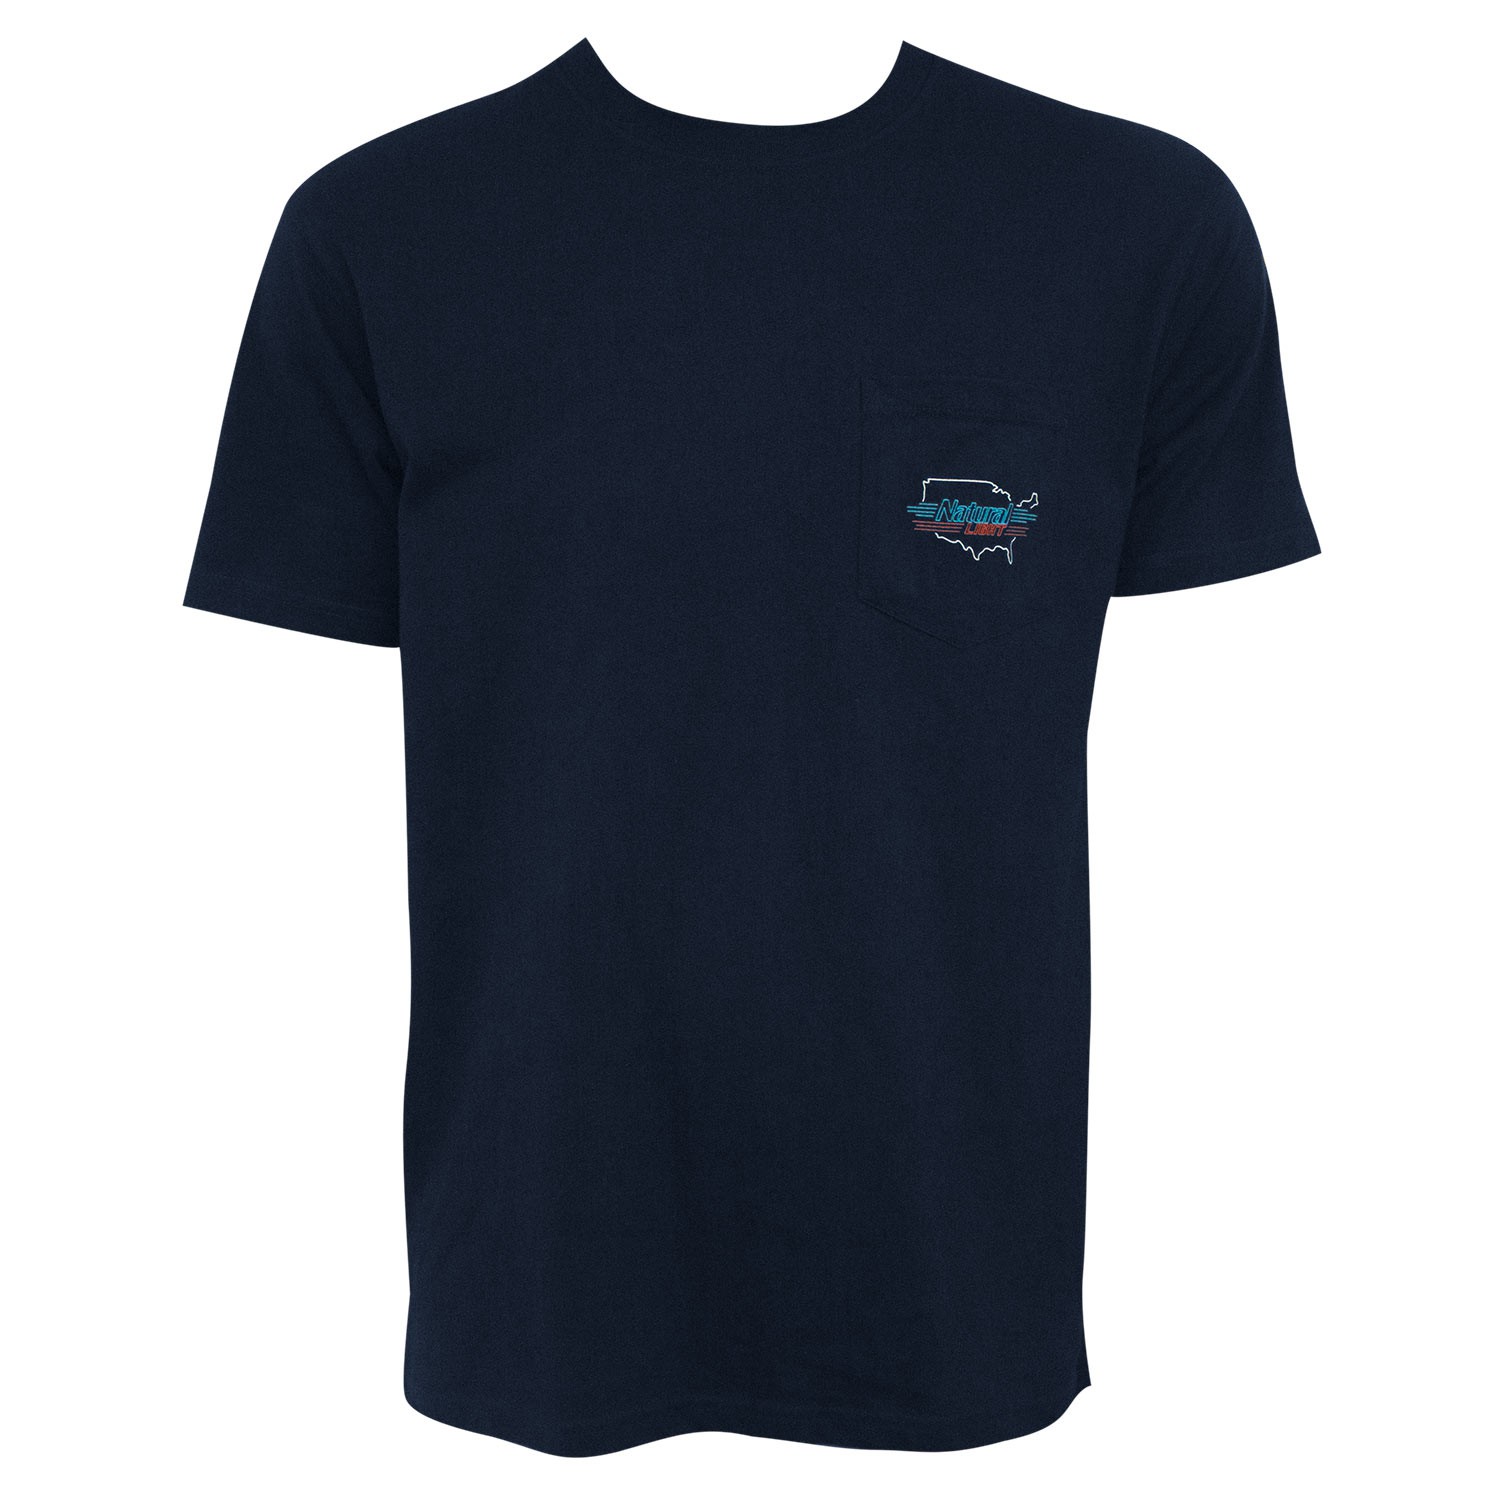 Natural Light Men's Navy Blue Proud American Pocket T-Shirt